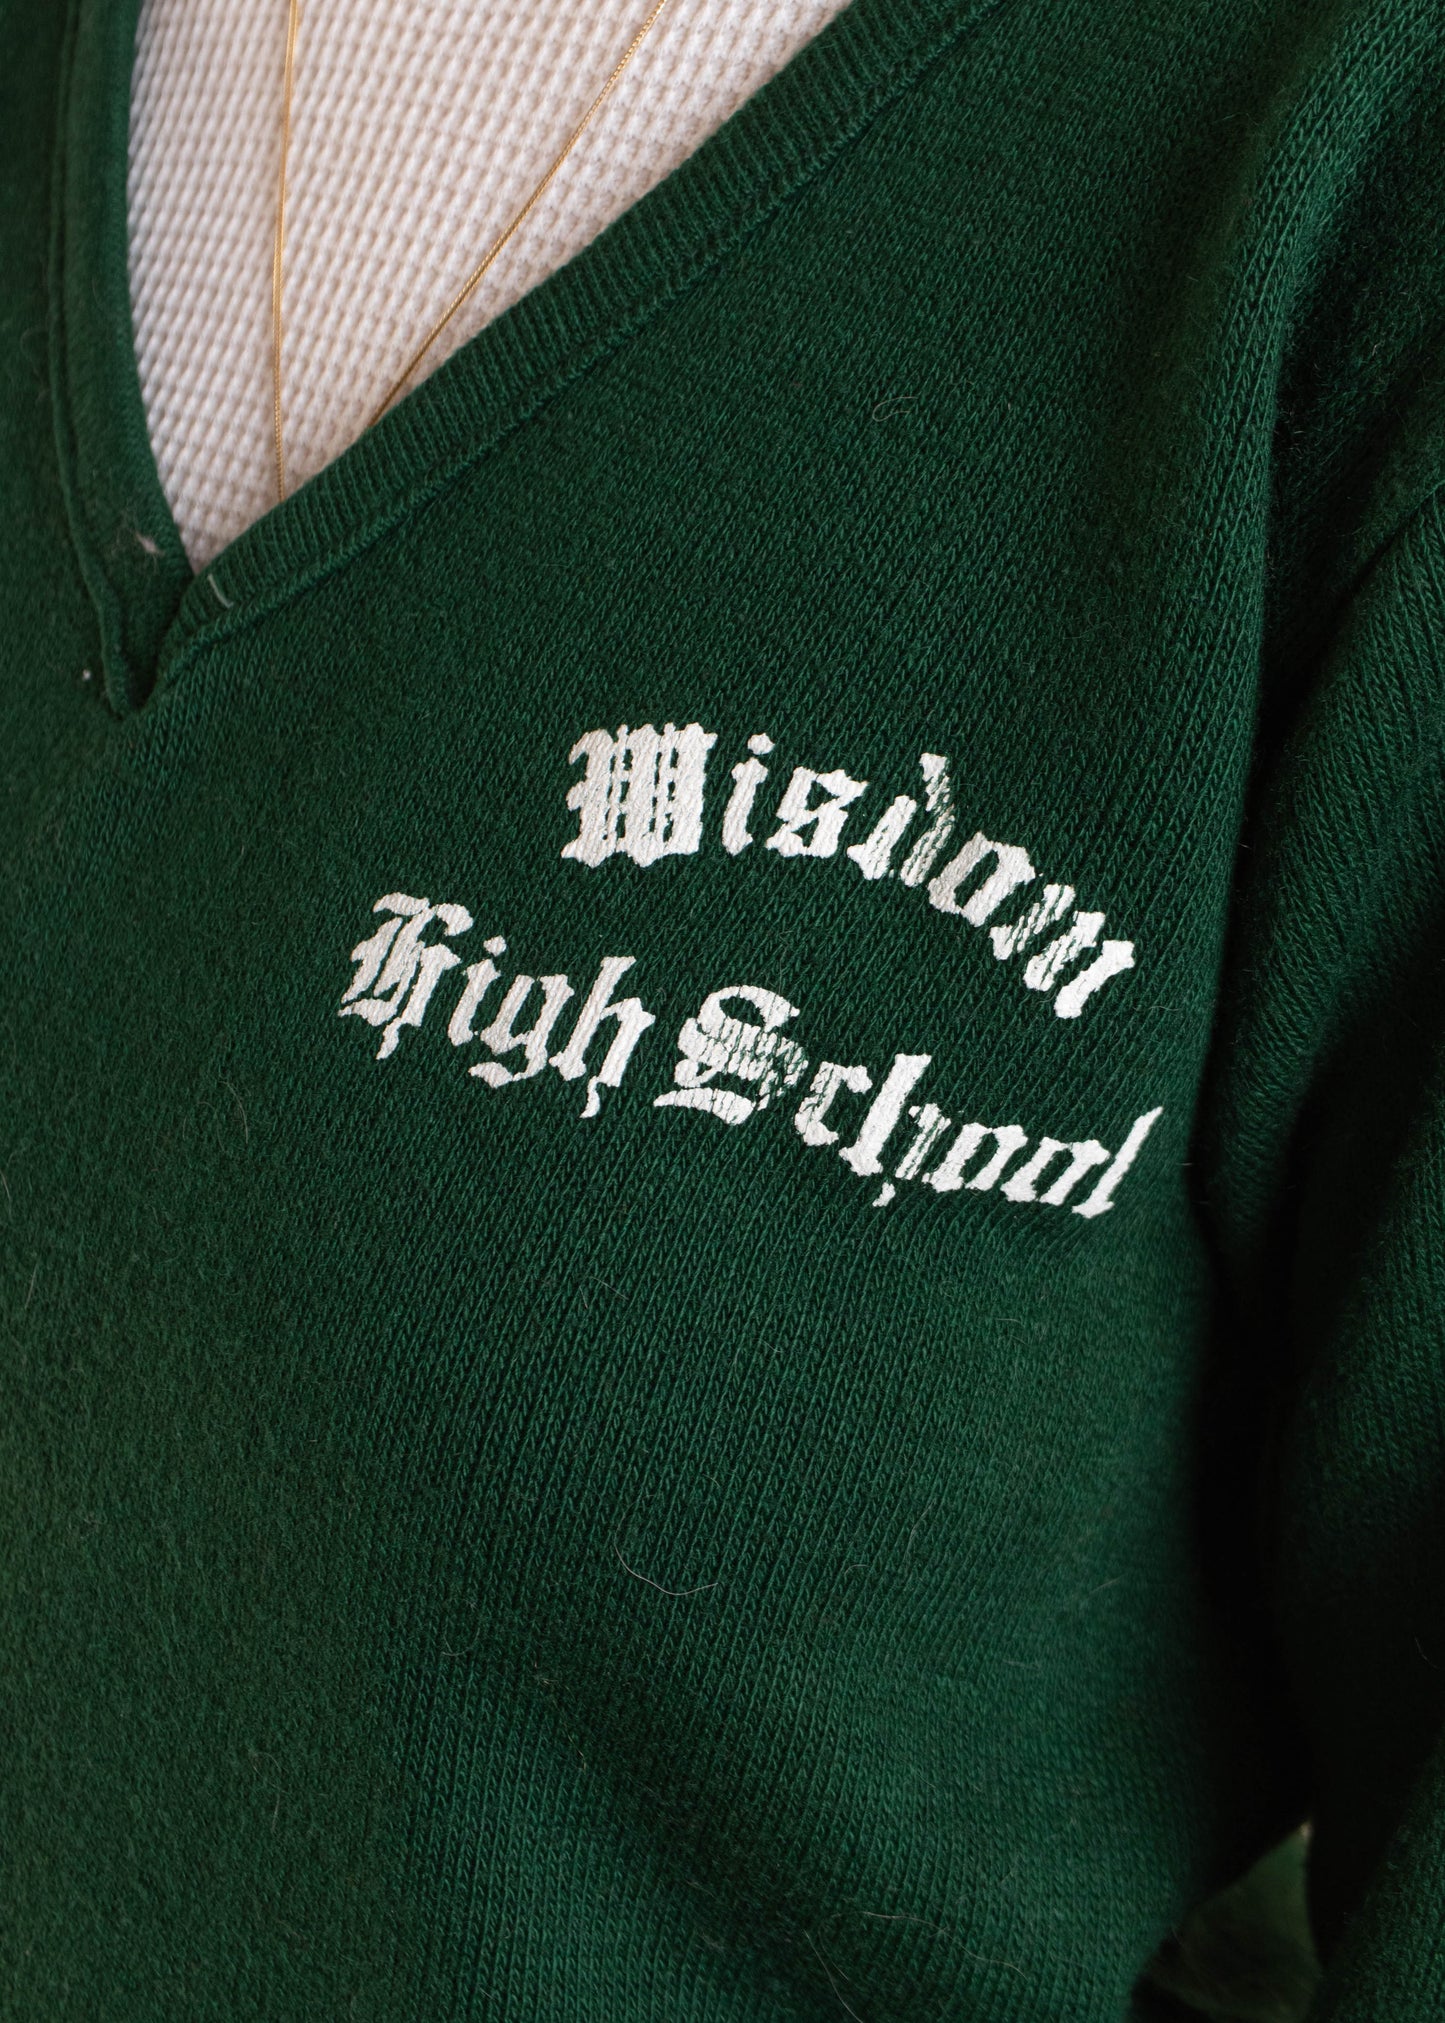 1980s Wisdom High School Pullover Sweater Size XS/S